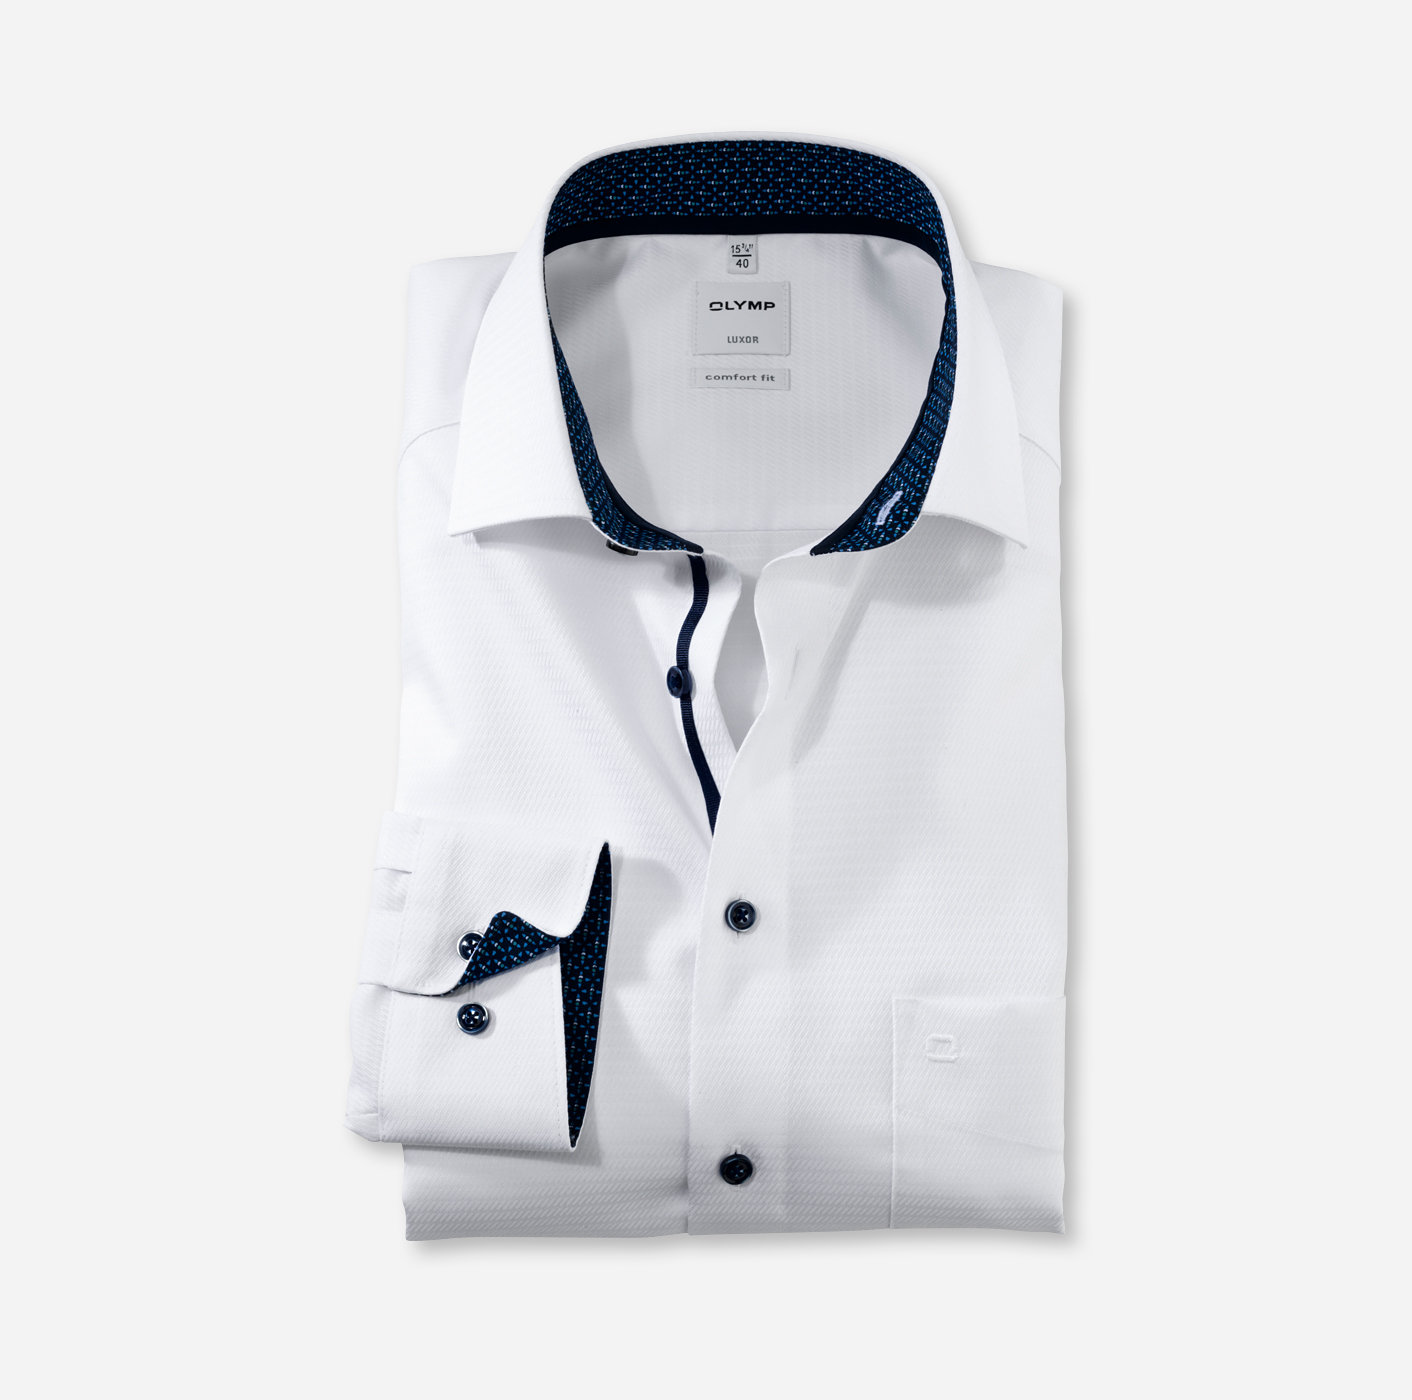 OLYMP Luxor, comfort fit, Business shirt, Global Kent, Blanc